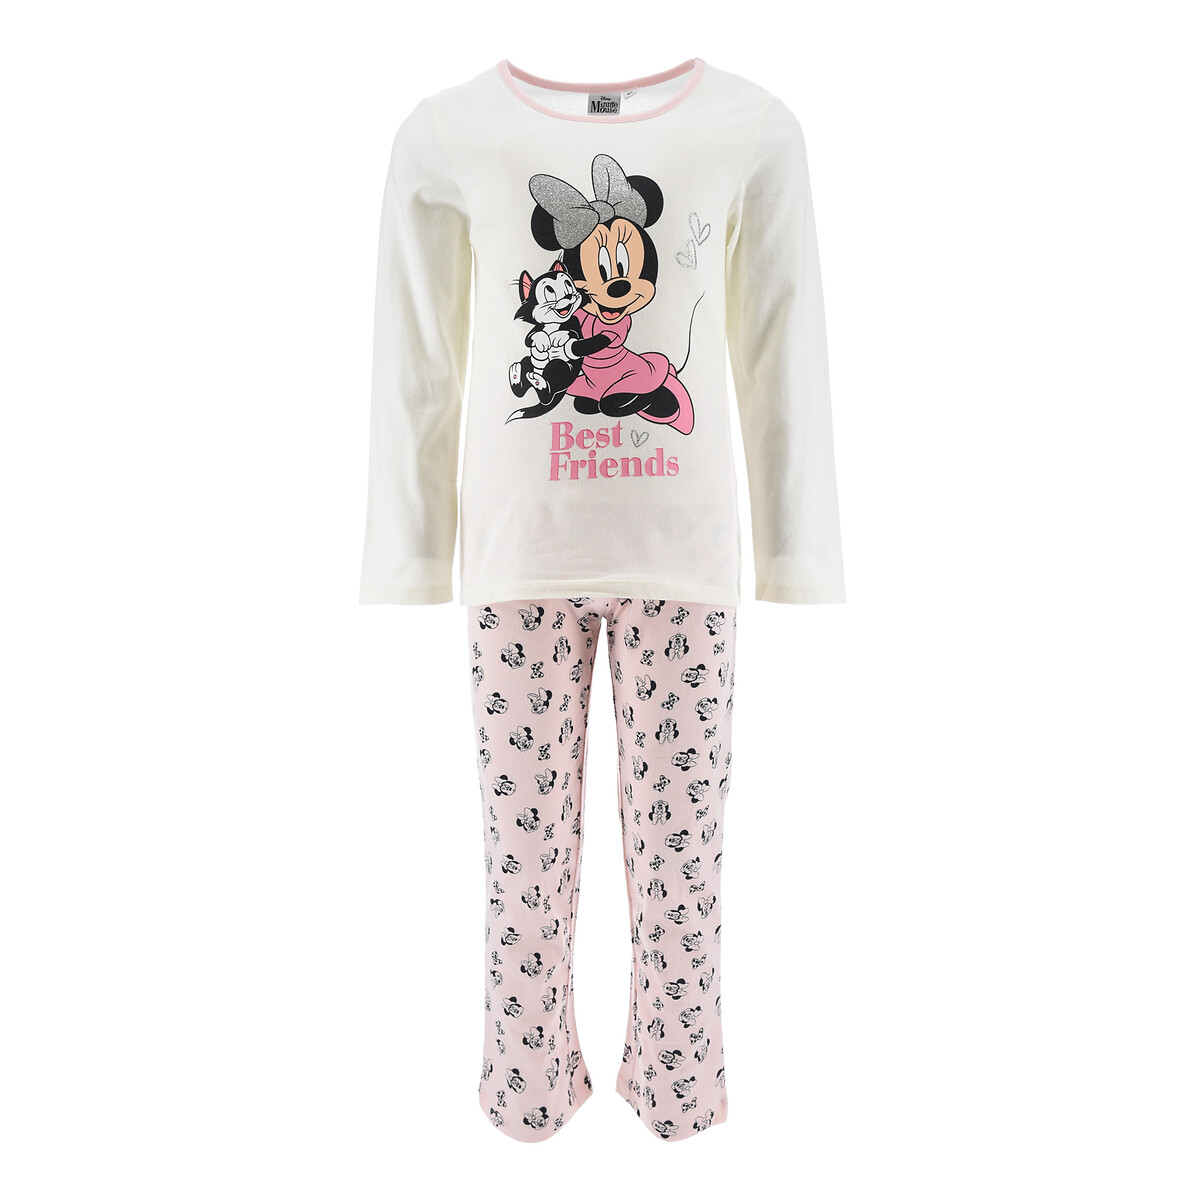 Pyjama Minnie Mouse von Minnie Mouse